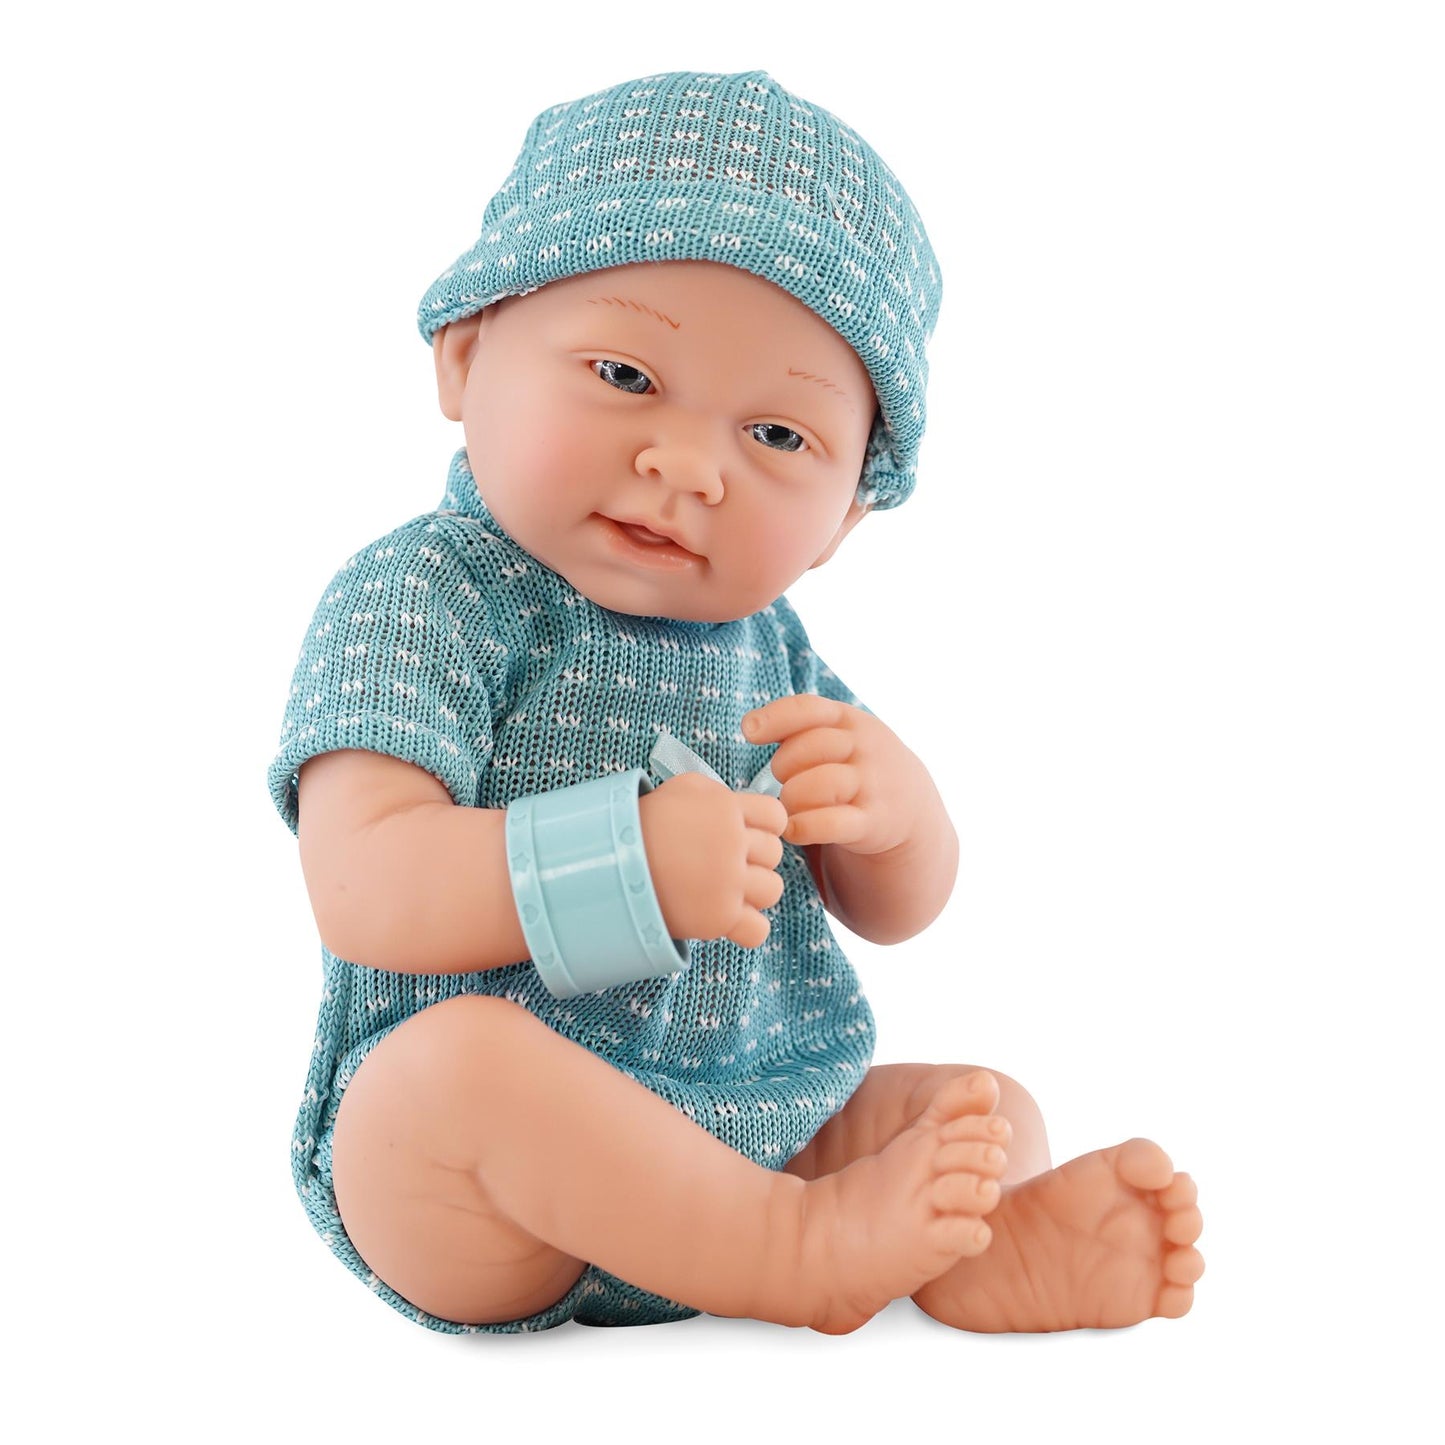 BiBi Newborn Boy Doll & Accessories (35 cm / 14") by The Magic Toy Shop - UKBuyZone